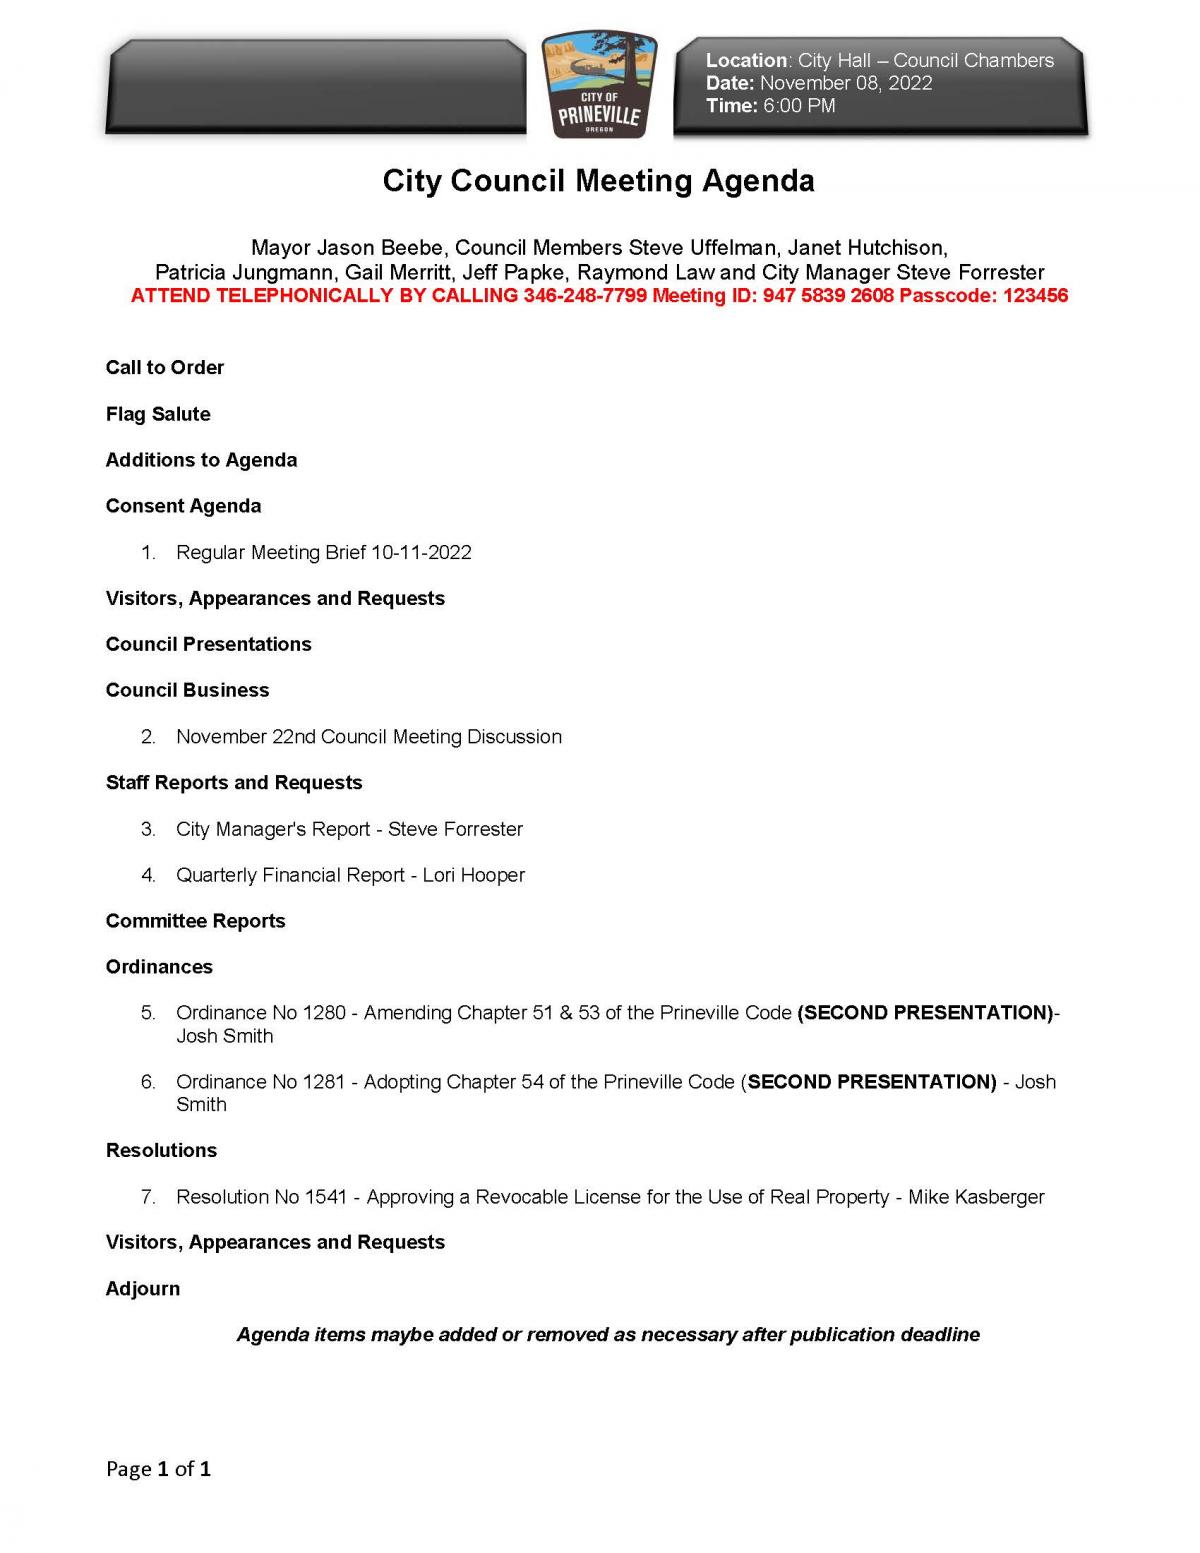 Council Agenda 11-8-2022